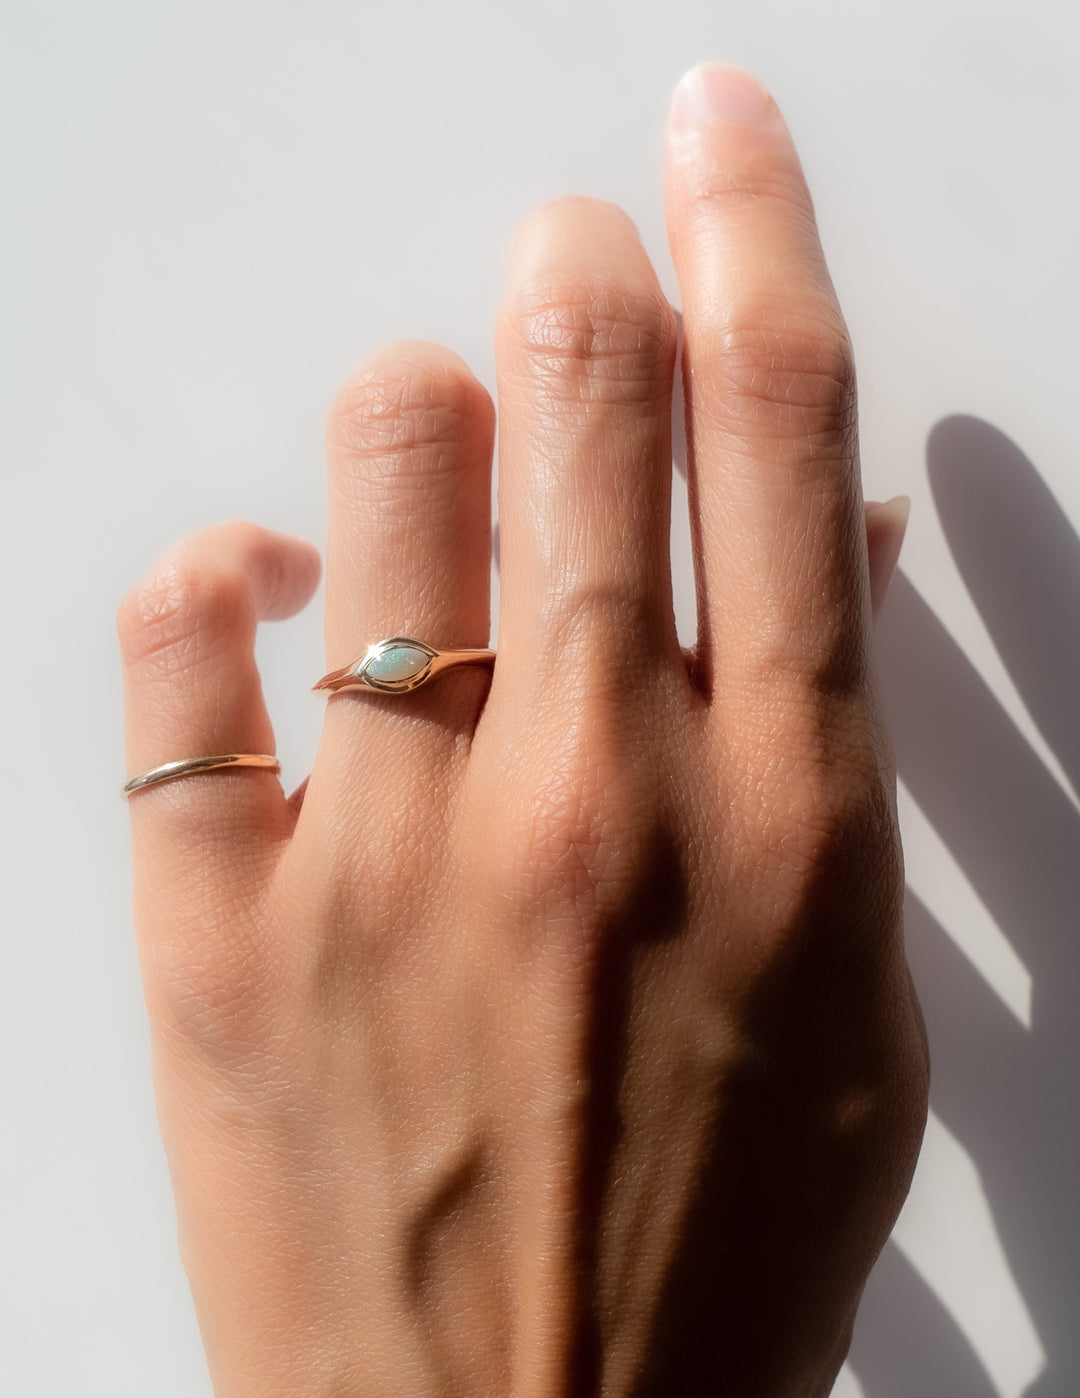 Gaia Opal Ring in Gold